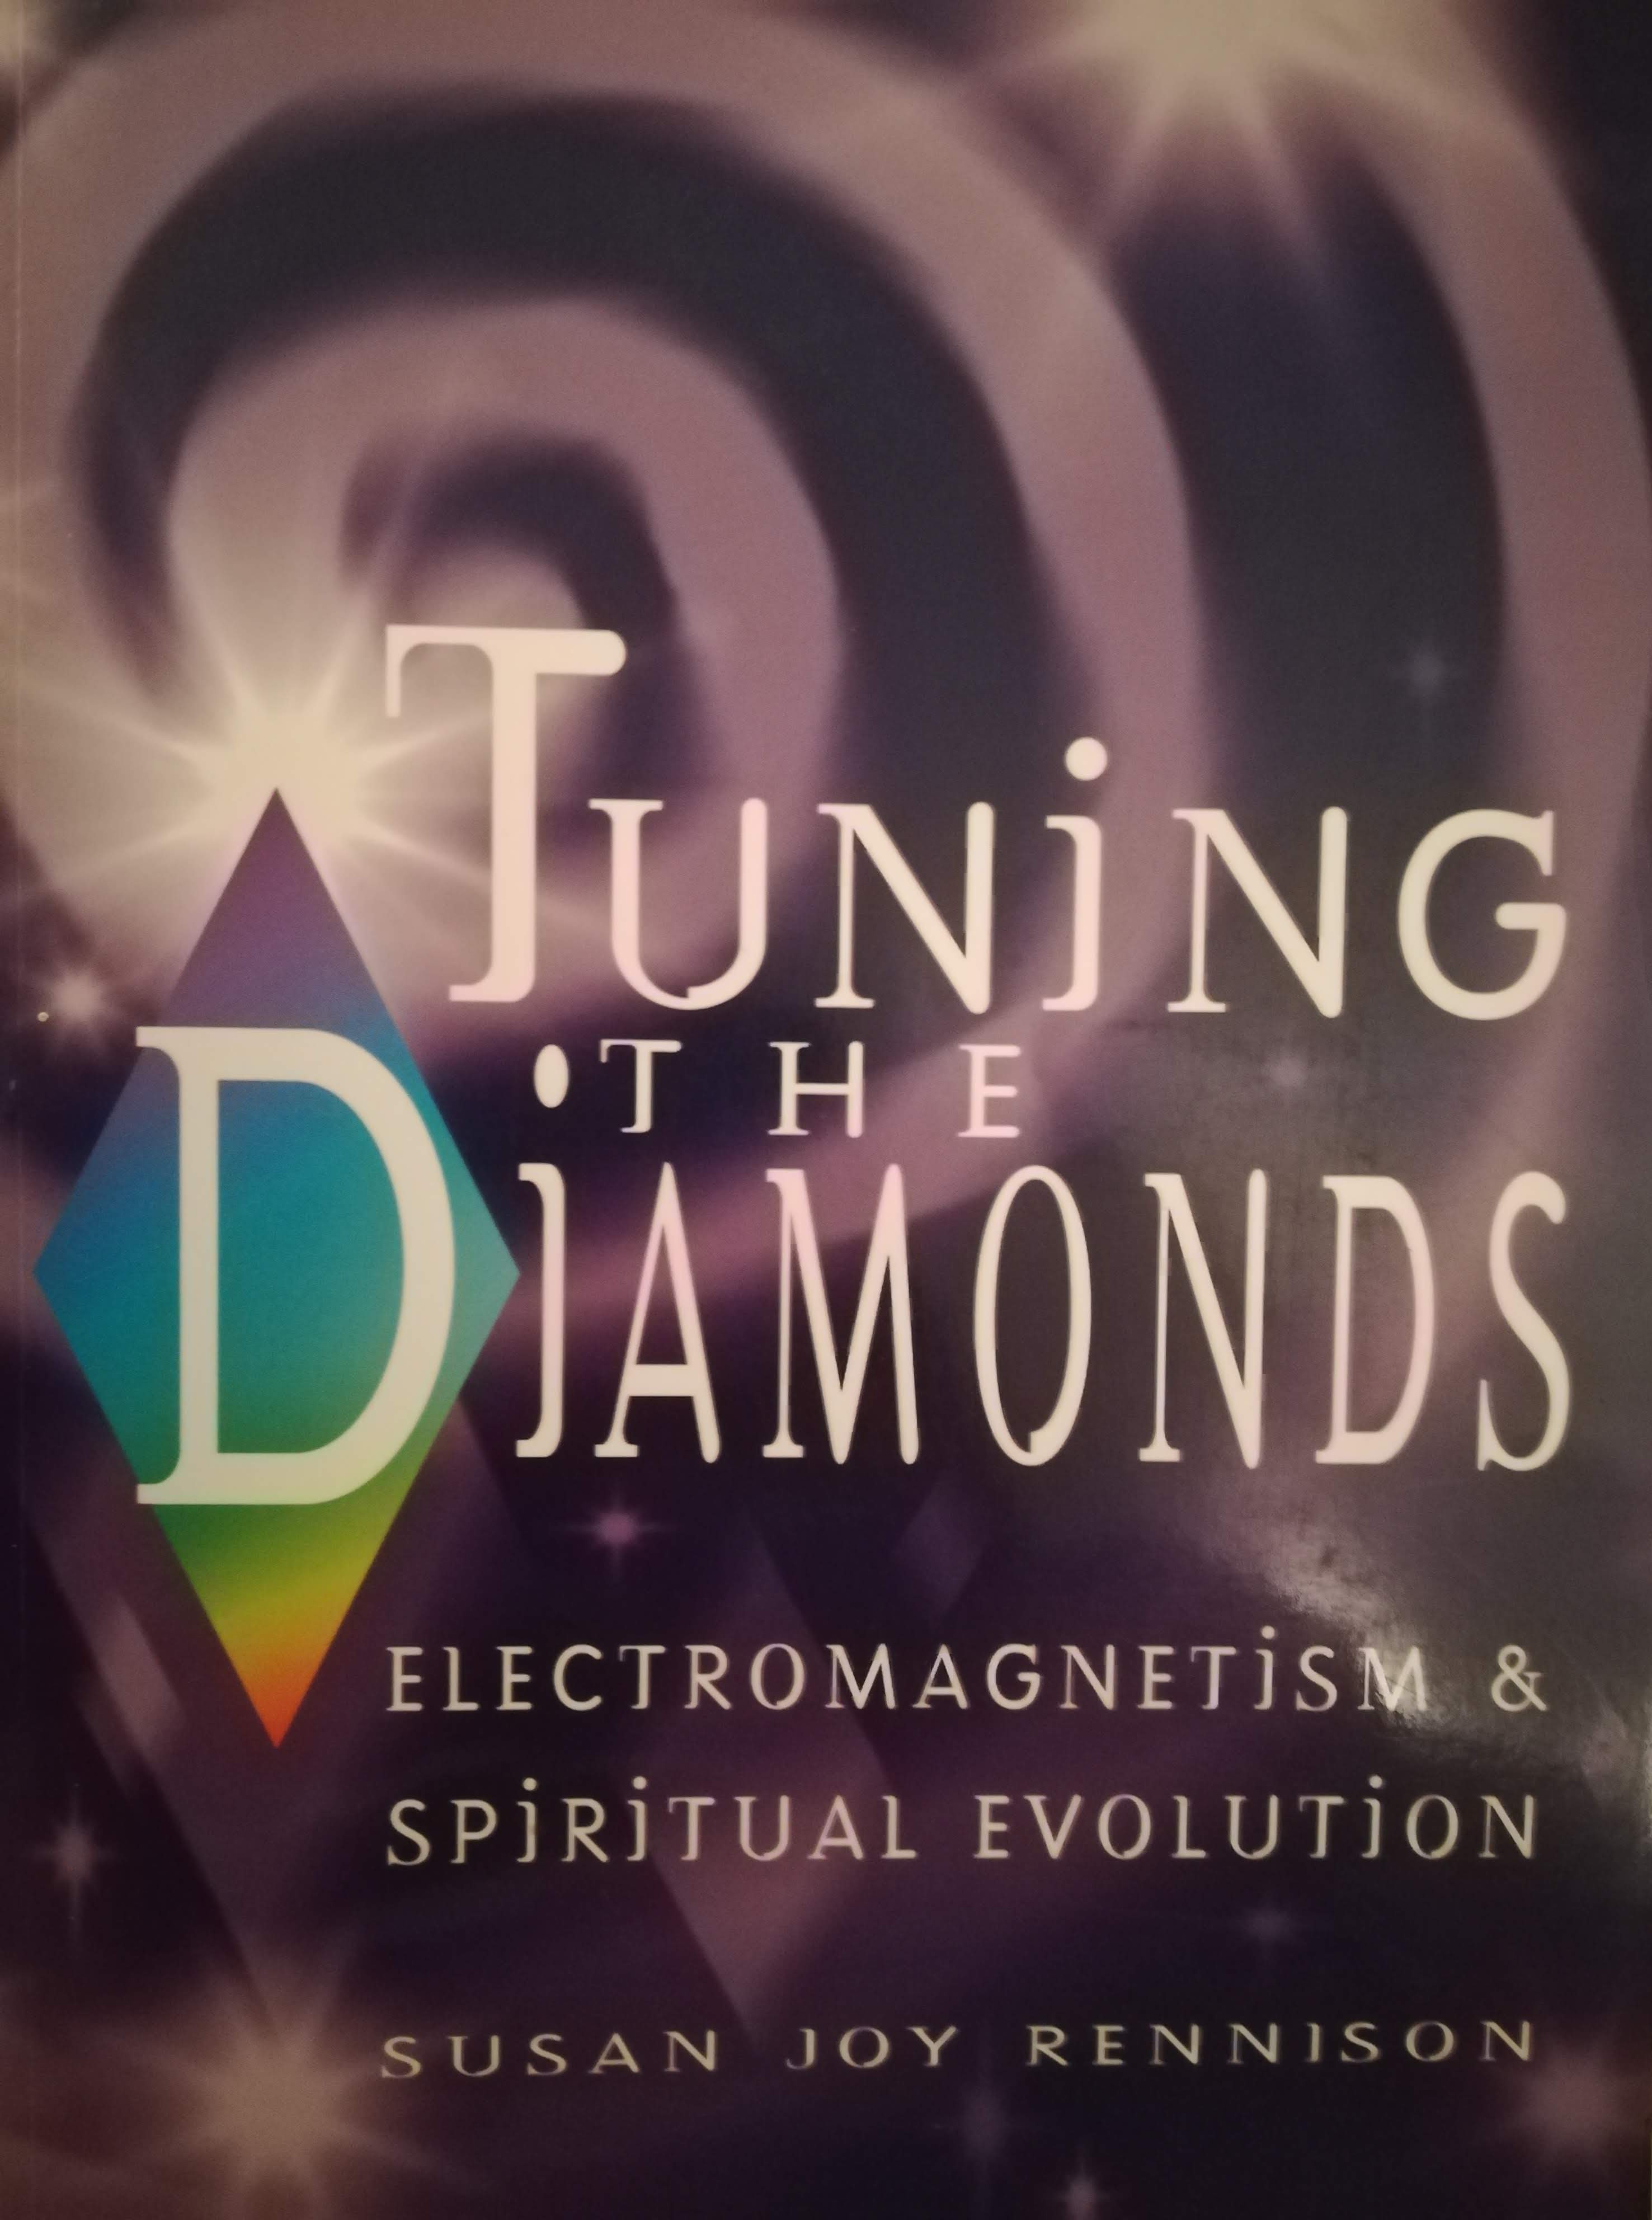 Tuning The Diamonds, Electromagnetism and Spiritual Evolution by Susan Joy Rennison